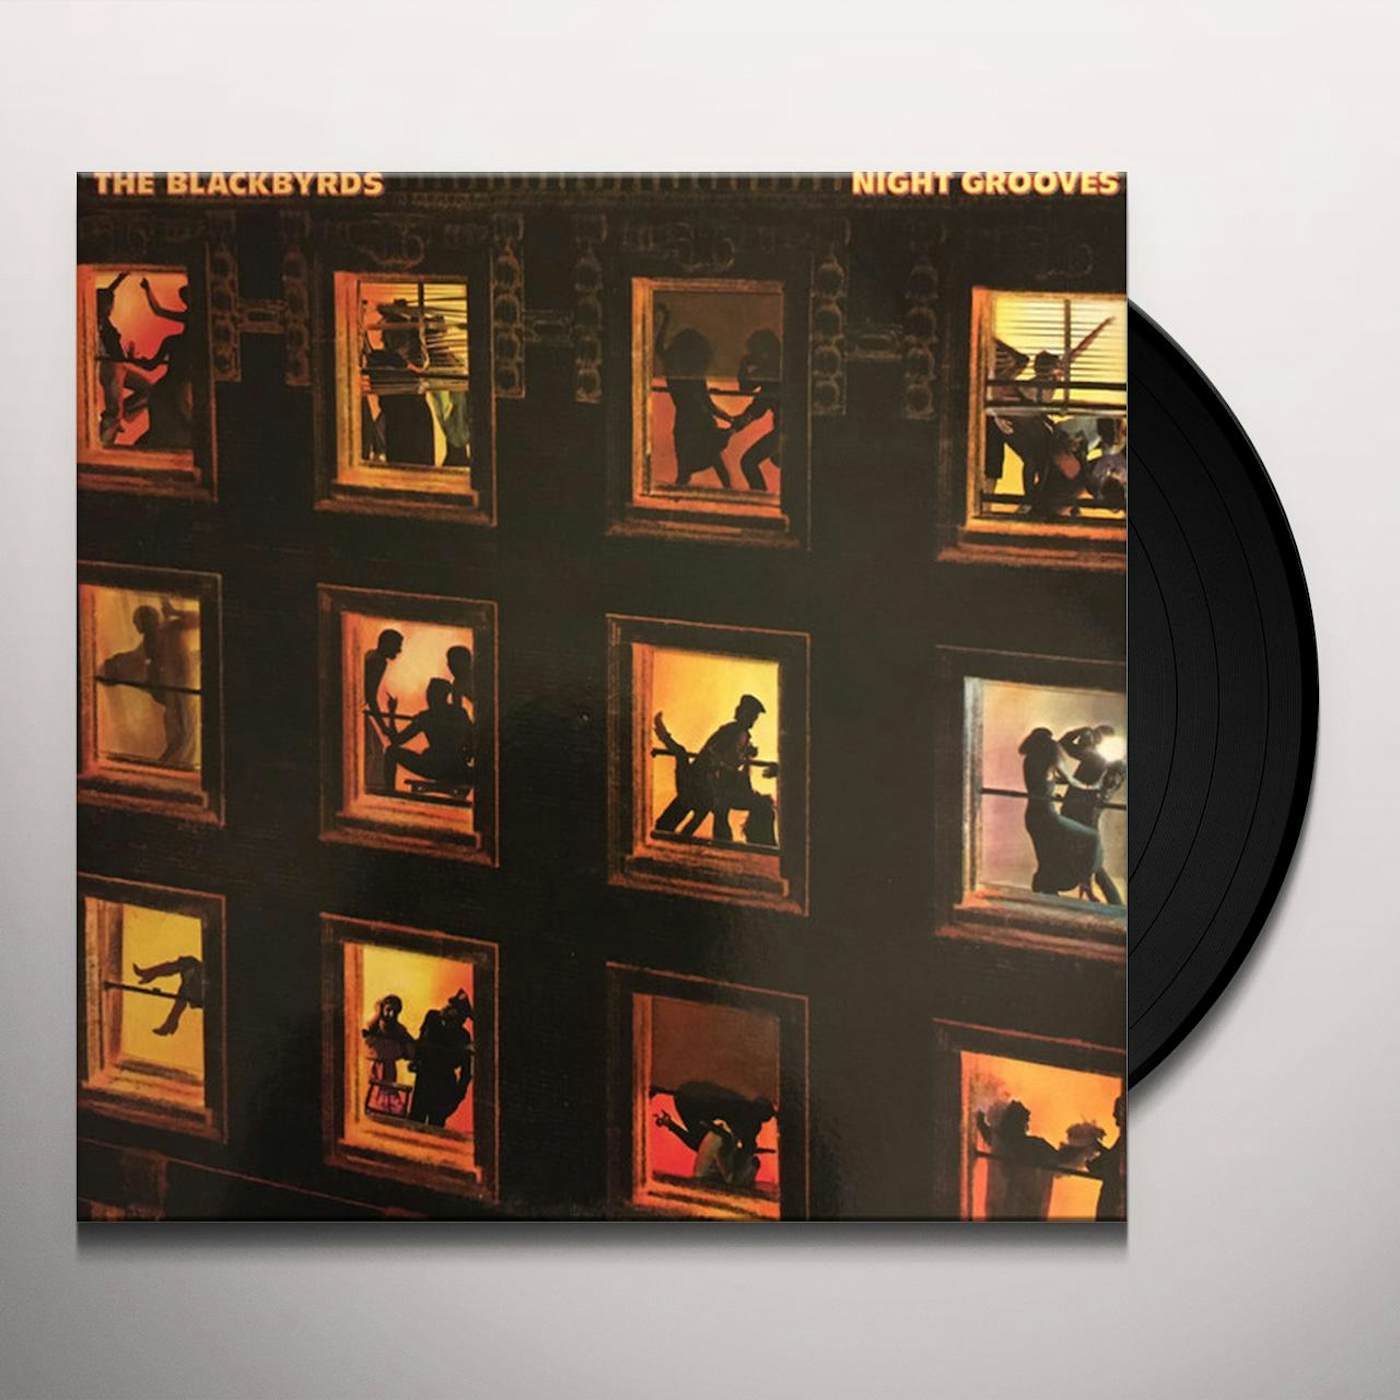 The Blackbyrds NIGHT GROOVES Vinyl Record